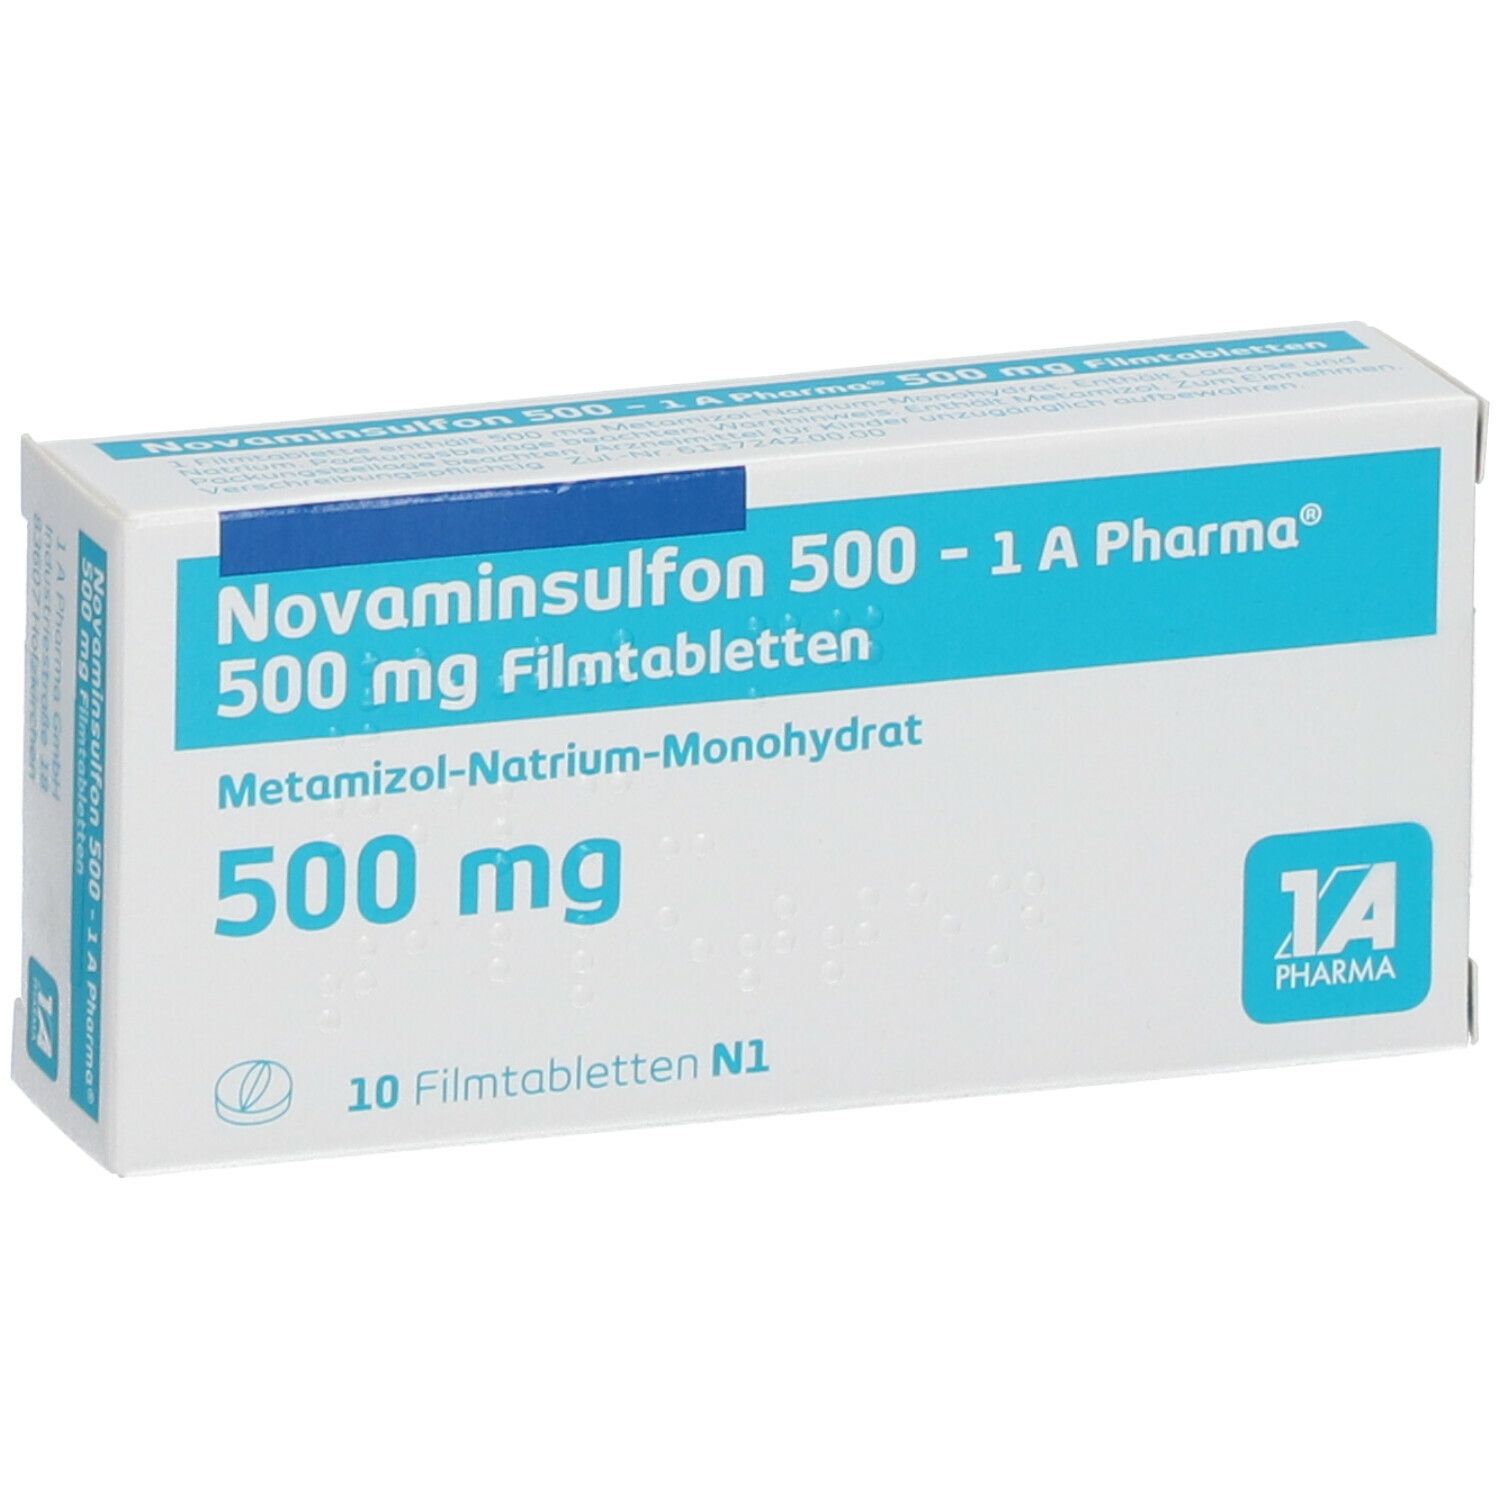 Novaminsulfon 500 - 1 A Pharma ®.